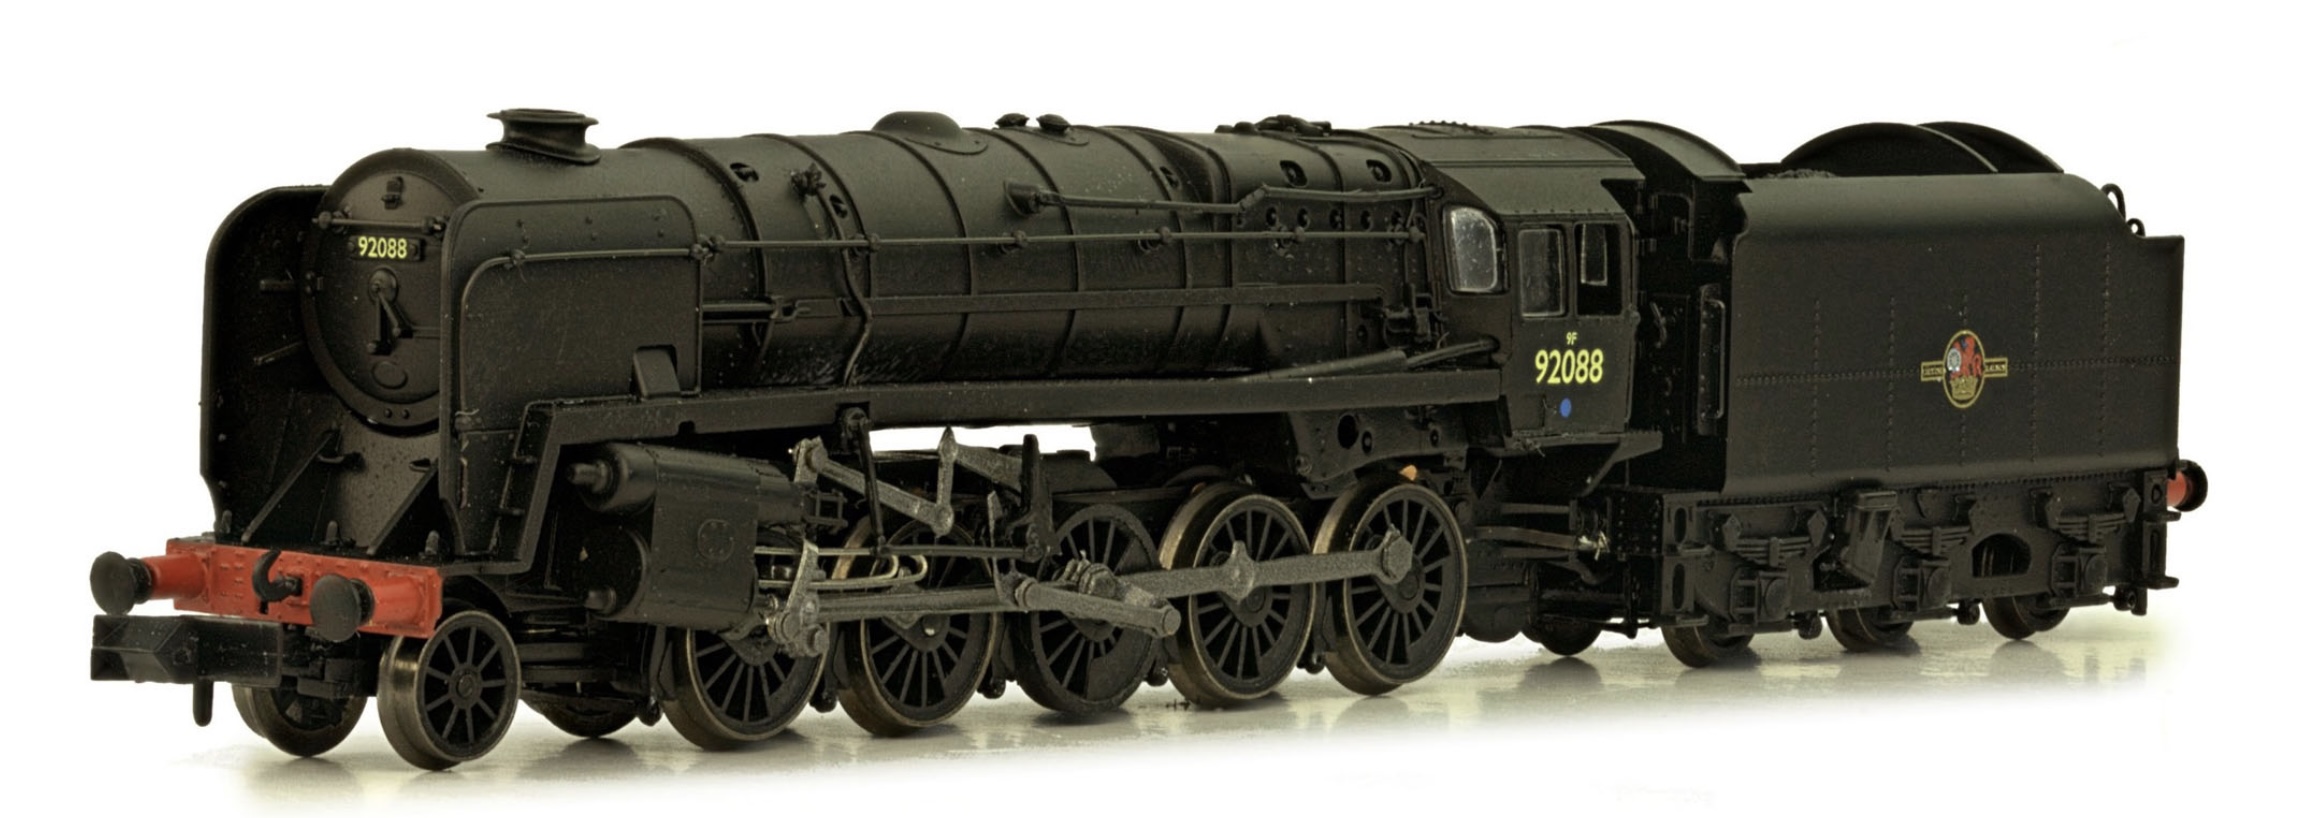 N Scale - Dapol - 2S-013-001 - Locomotive, Steam, 2-10-0 Class 9F - British Rail - 92088